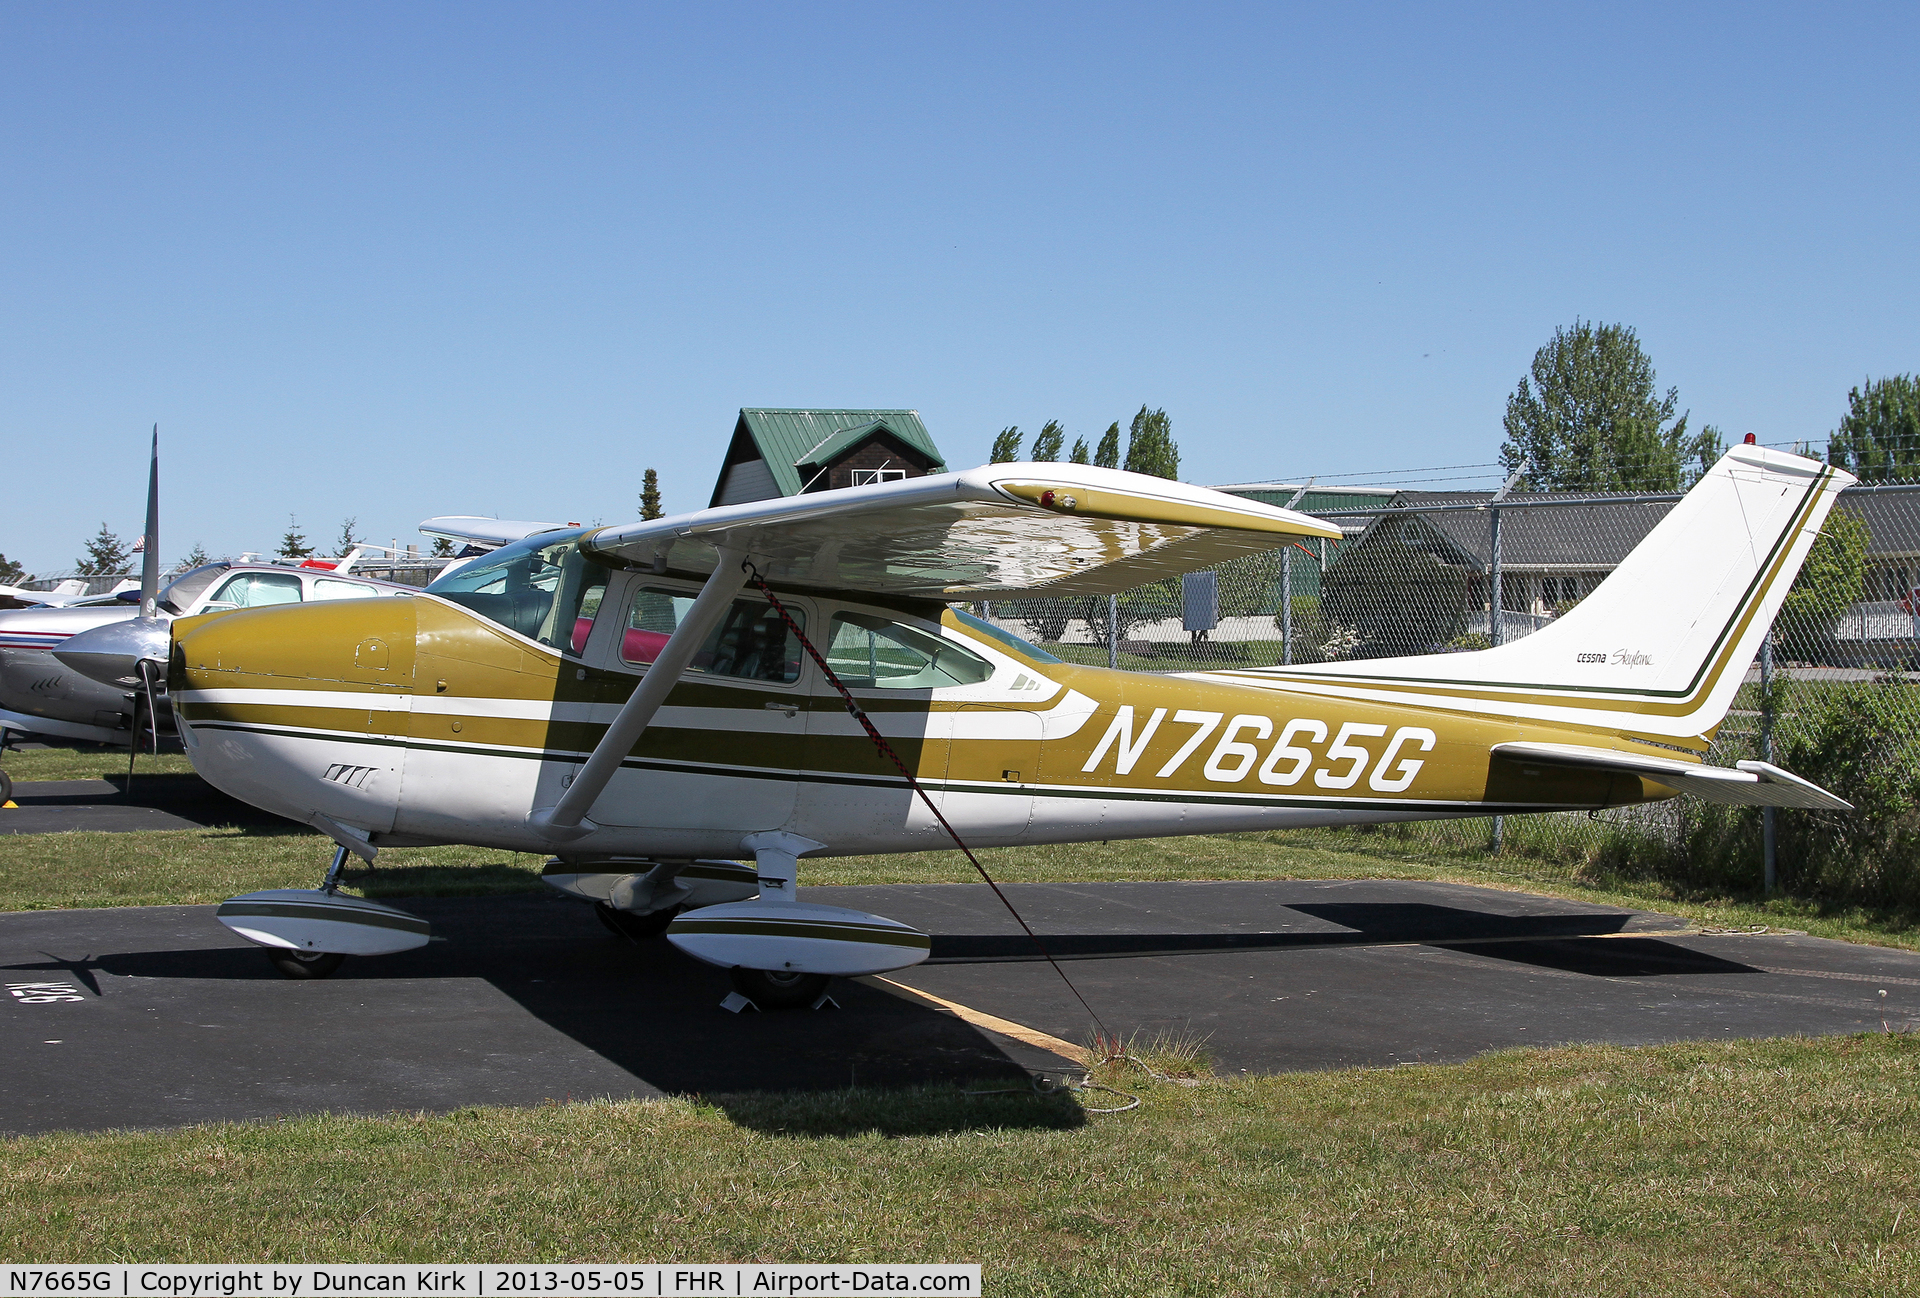 N7665G, 1974 Cessna 182P Skylane C/N 18263326, May heatwave visitor to the islands